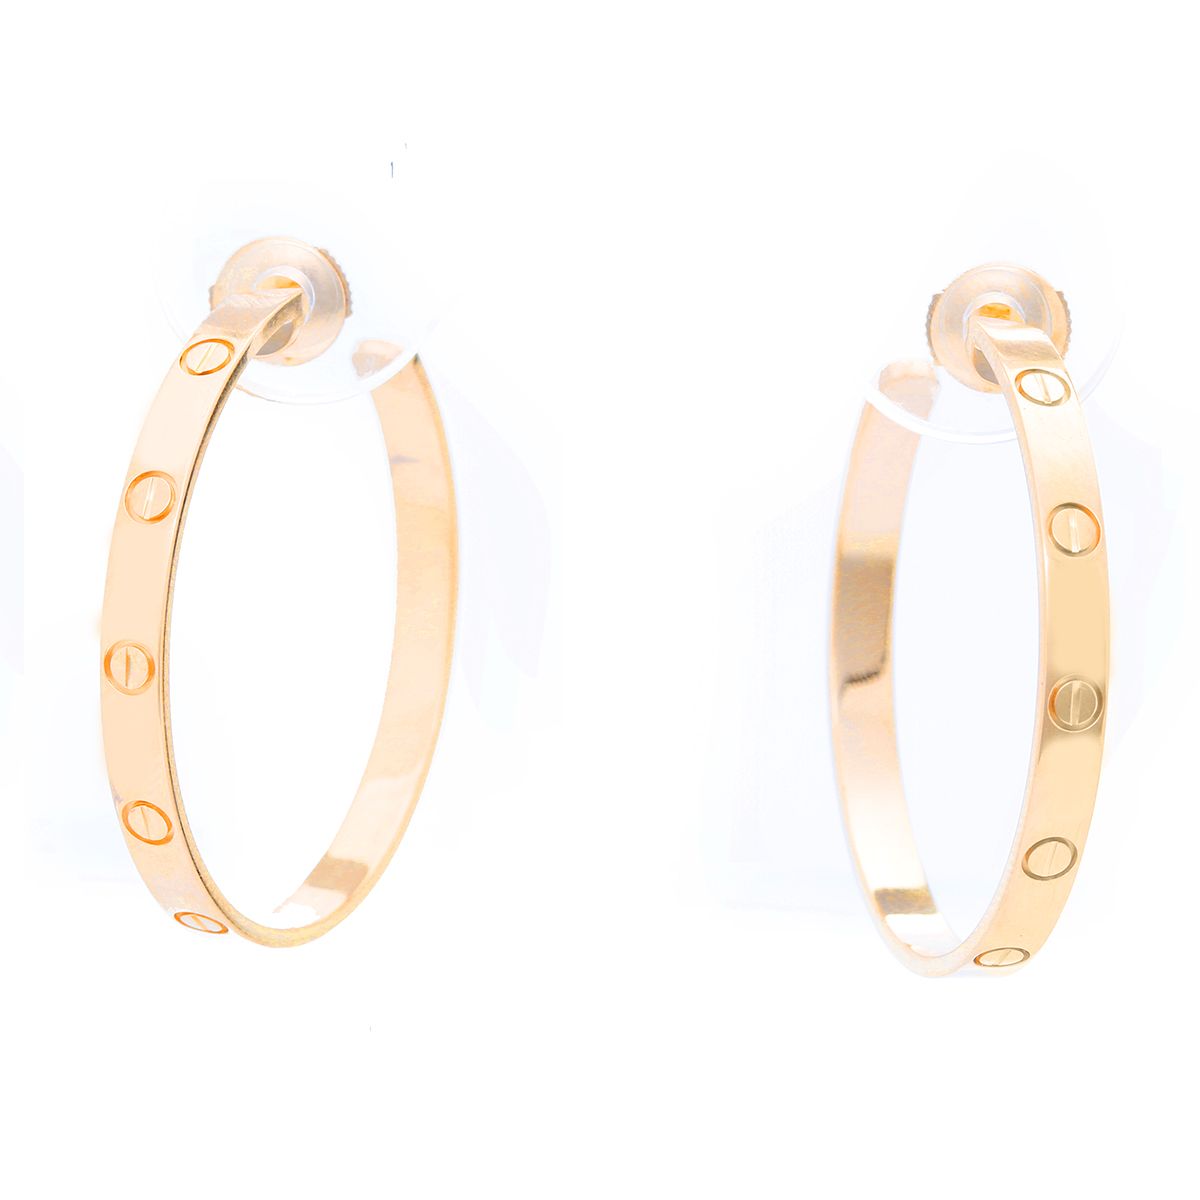 CRN8515192 - LOVE earrings - Rose gold, diamond - Cartier